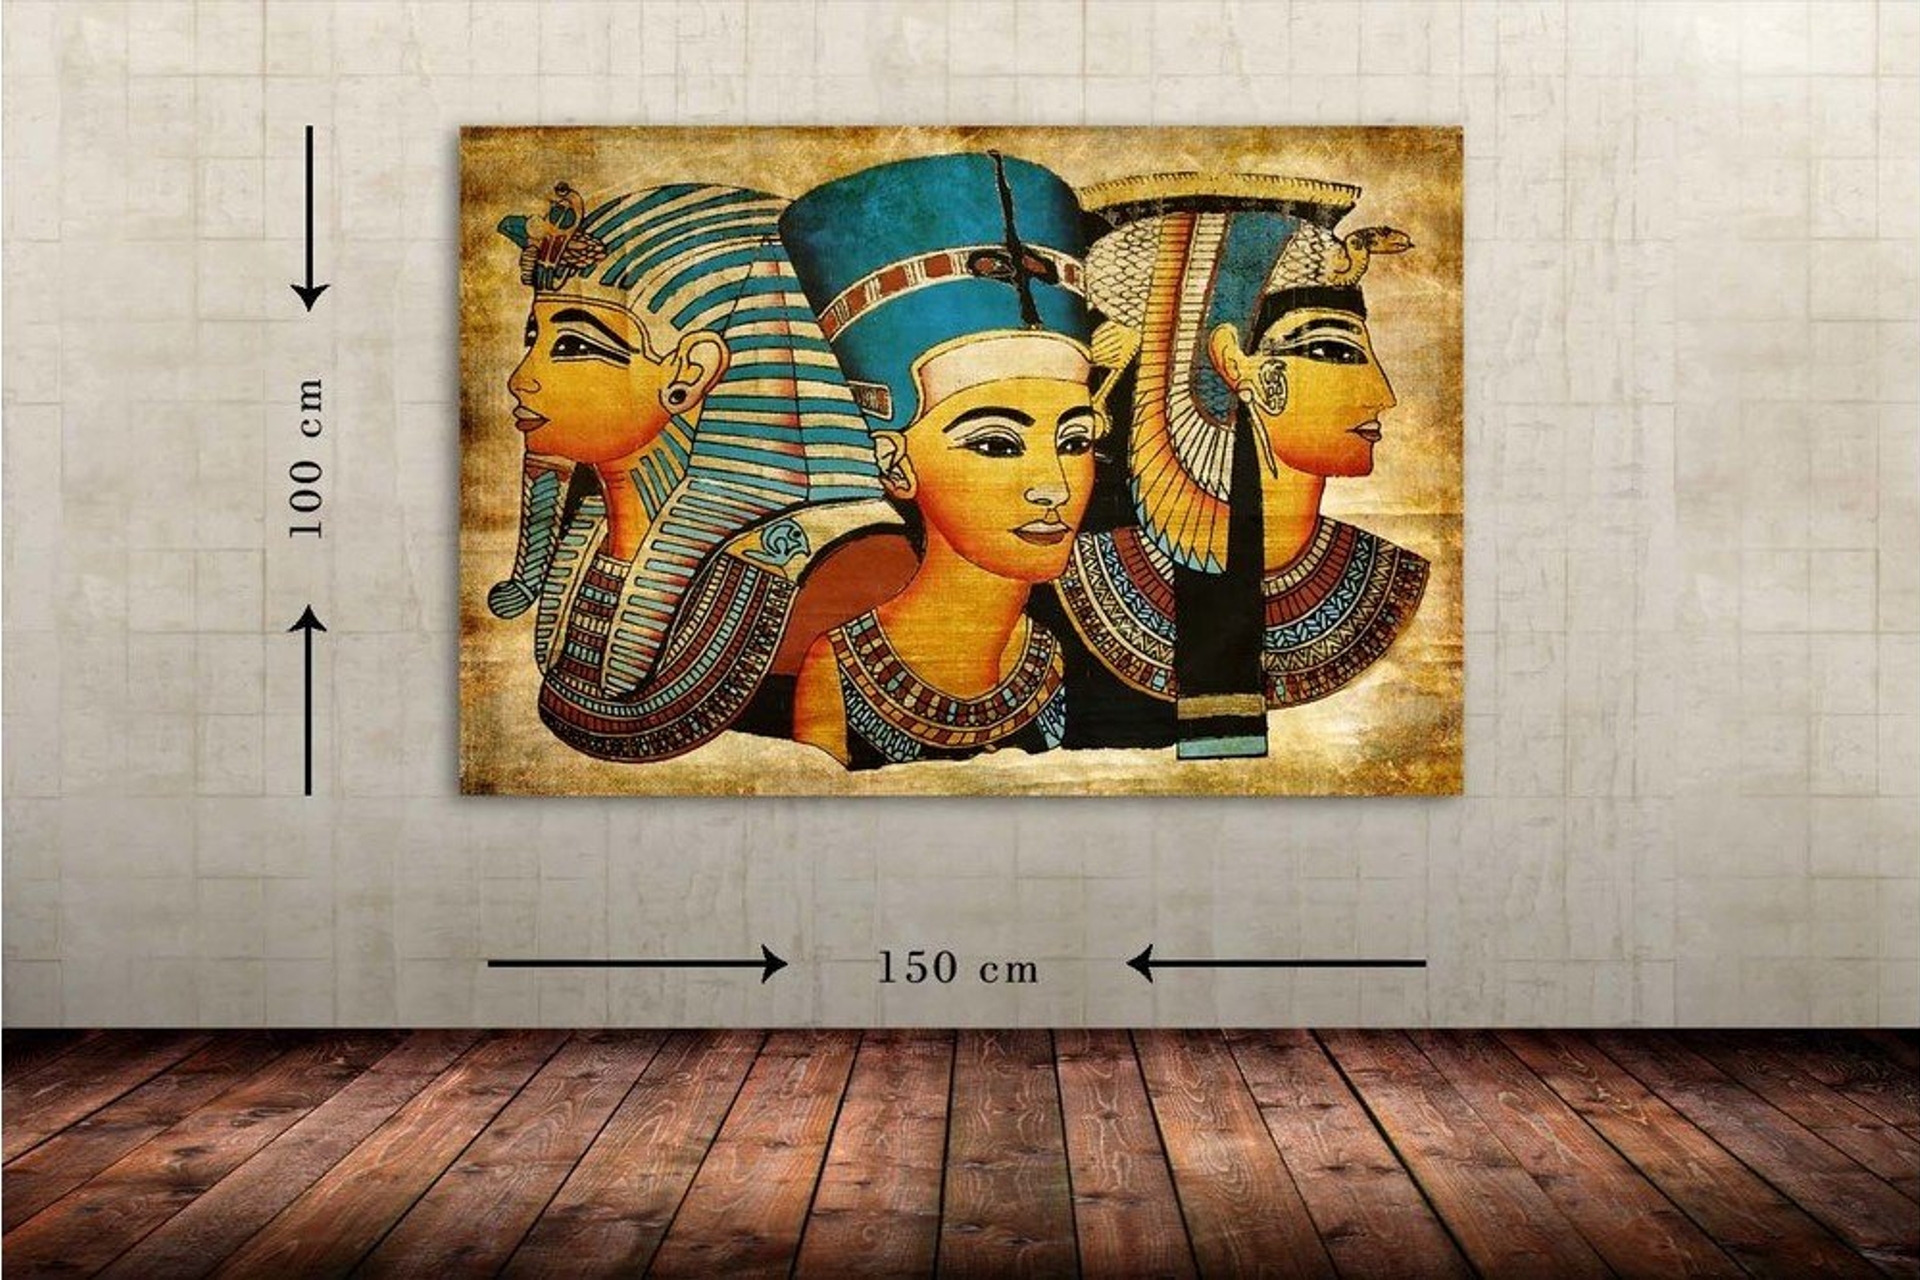 EGYPT 2 DEV BOYUT CANVAS TABLO 100X150 CM